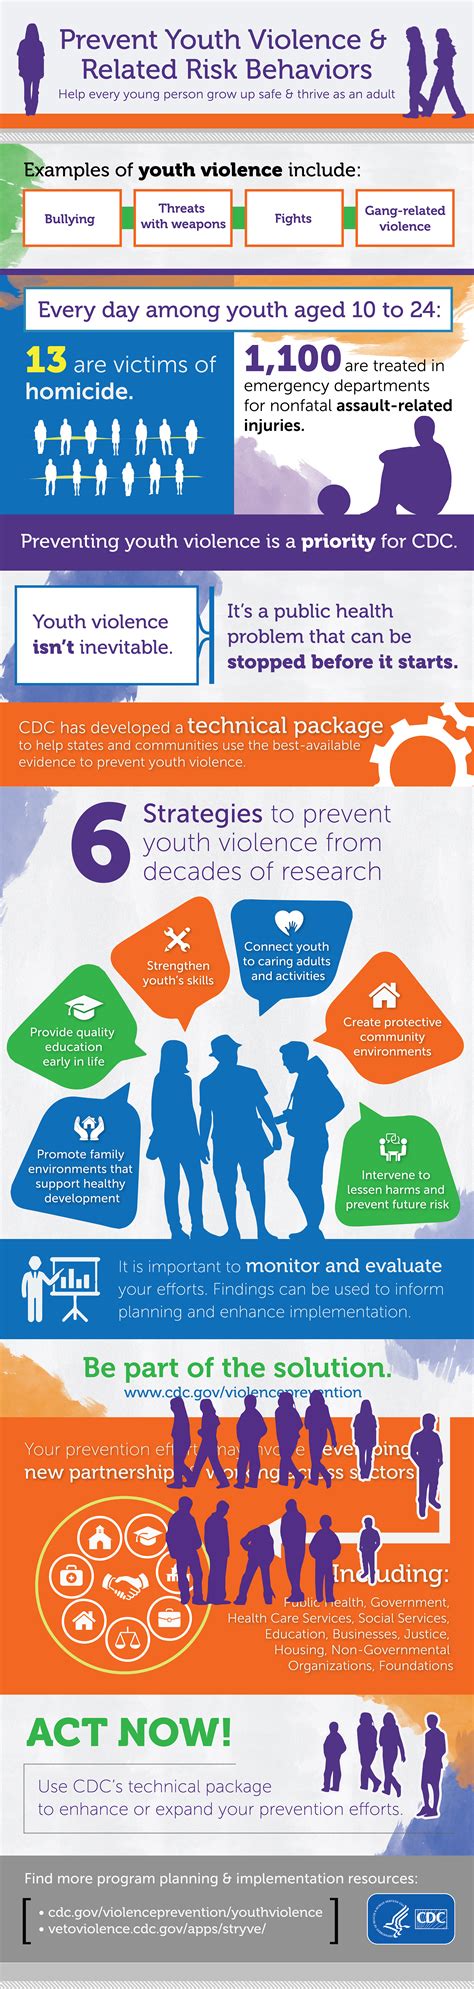 Youth Violence Prevention |Violence Prevention Publications|Violence 